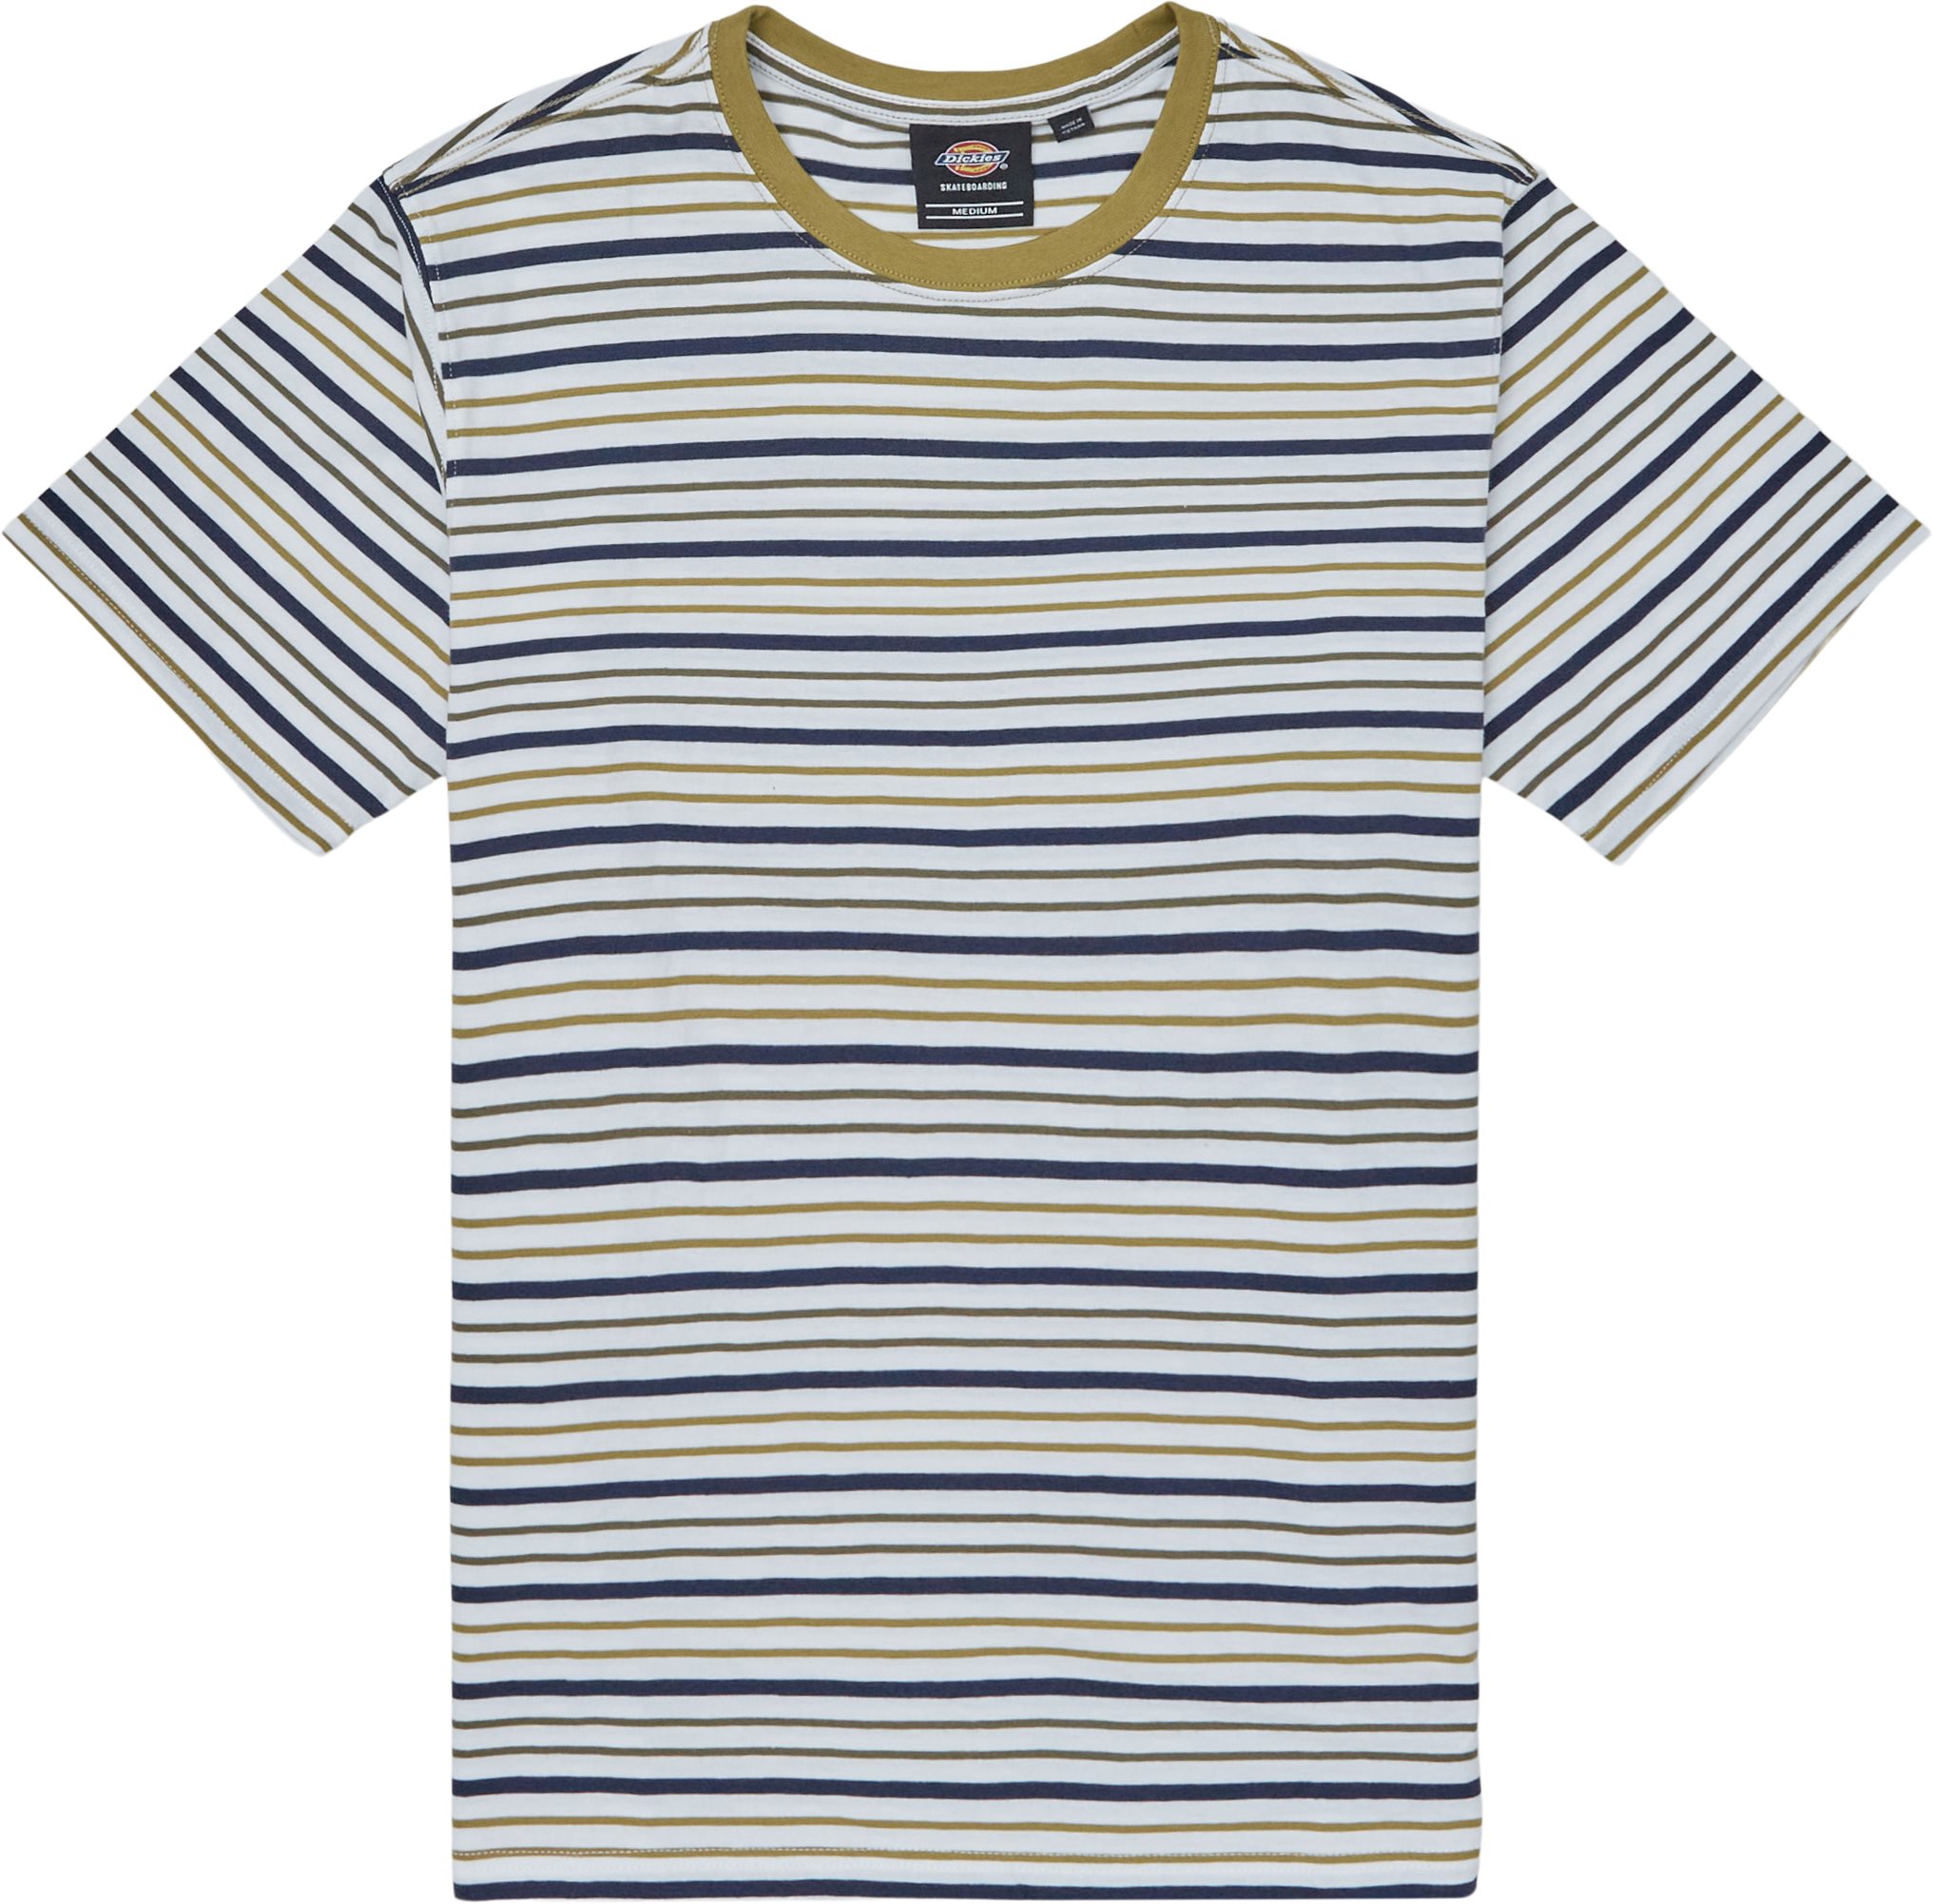 Bothell Stripe Tee - T-shirts - Regular fit - Green